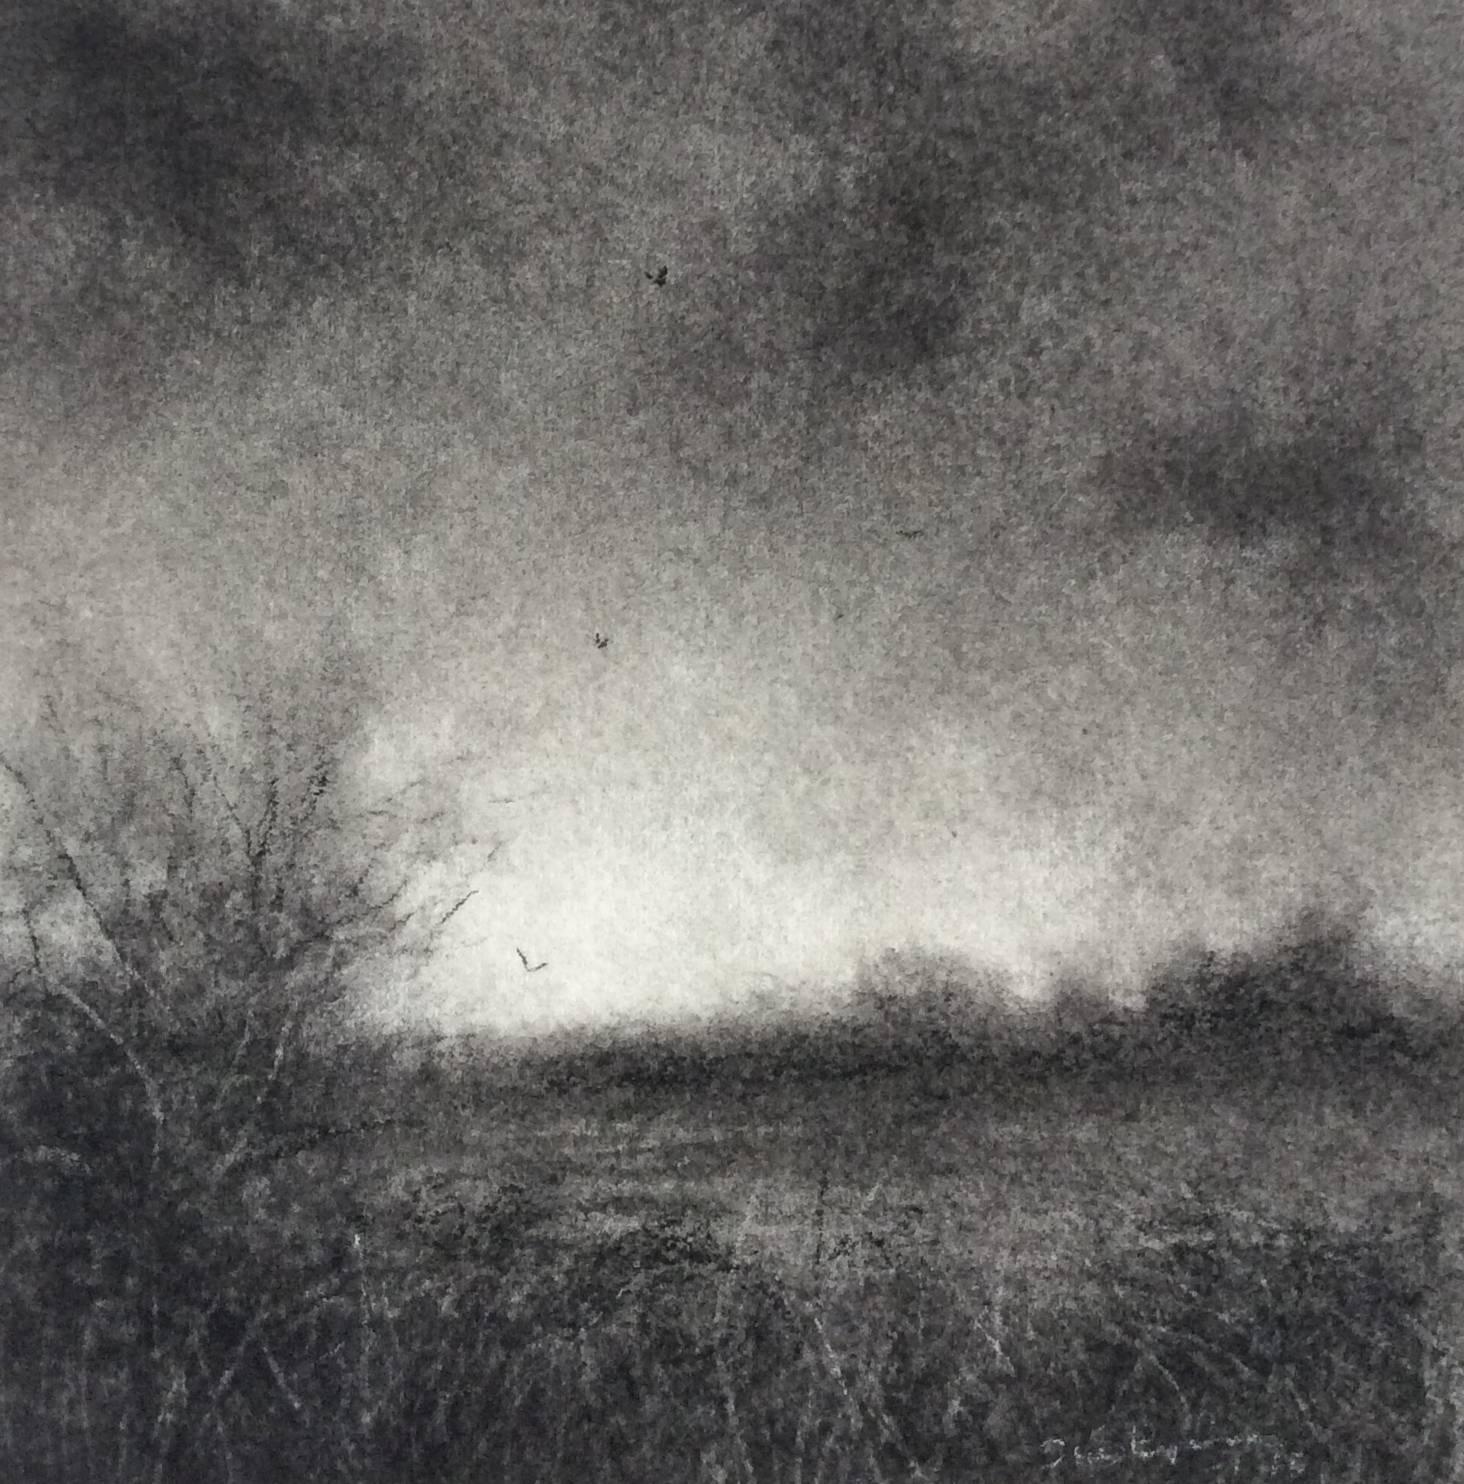 Sue Bryan Landscape Art - Edgeland XV (Small Realistic Landscape Drawing in Black Charcoal)